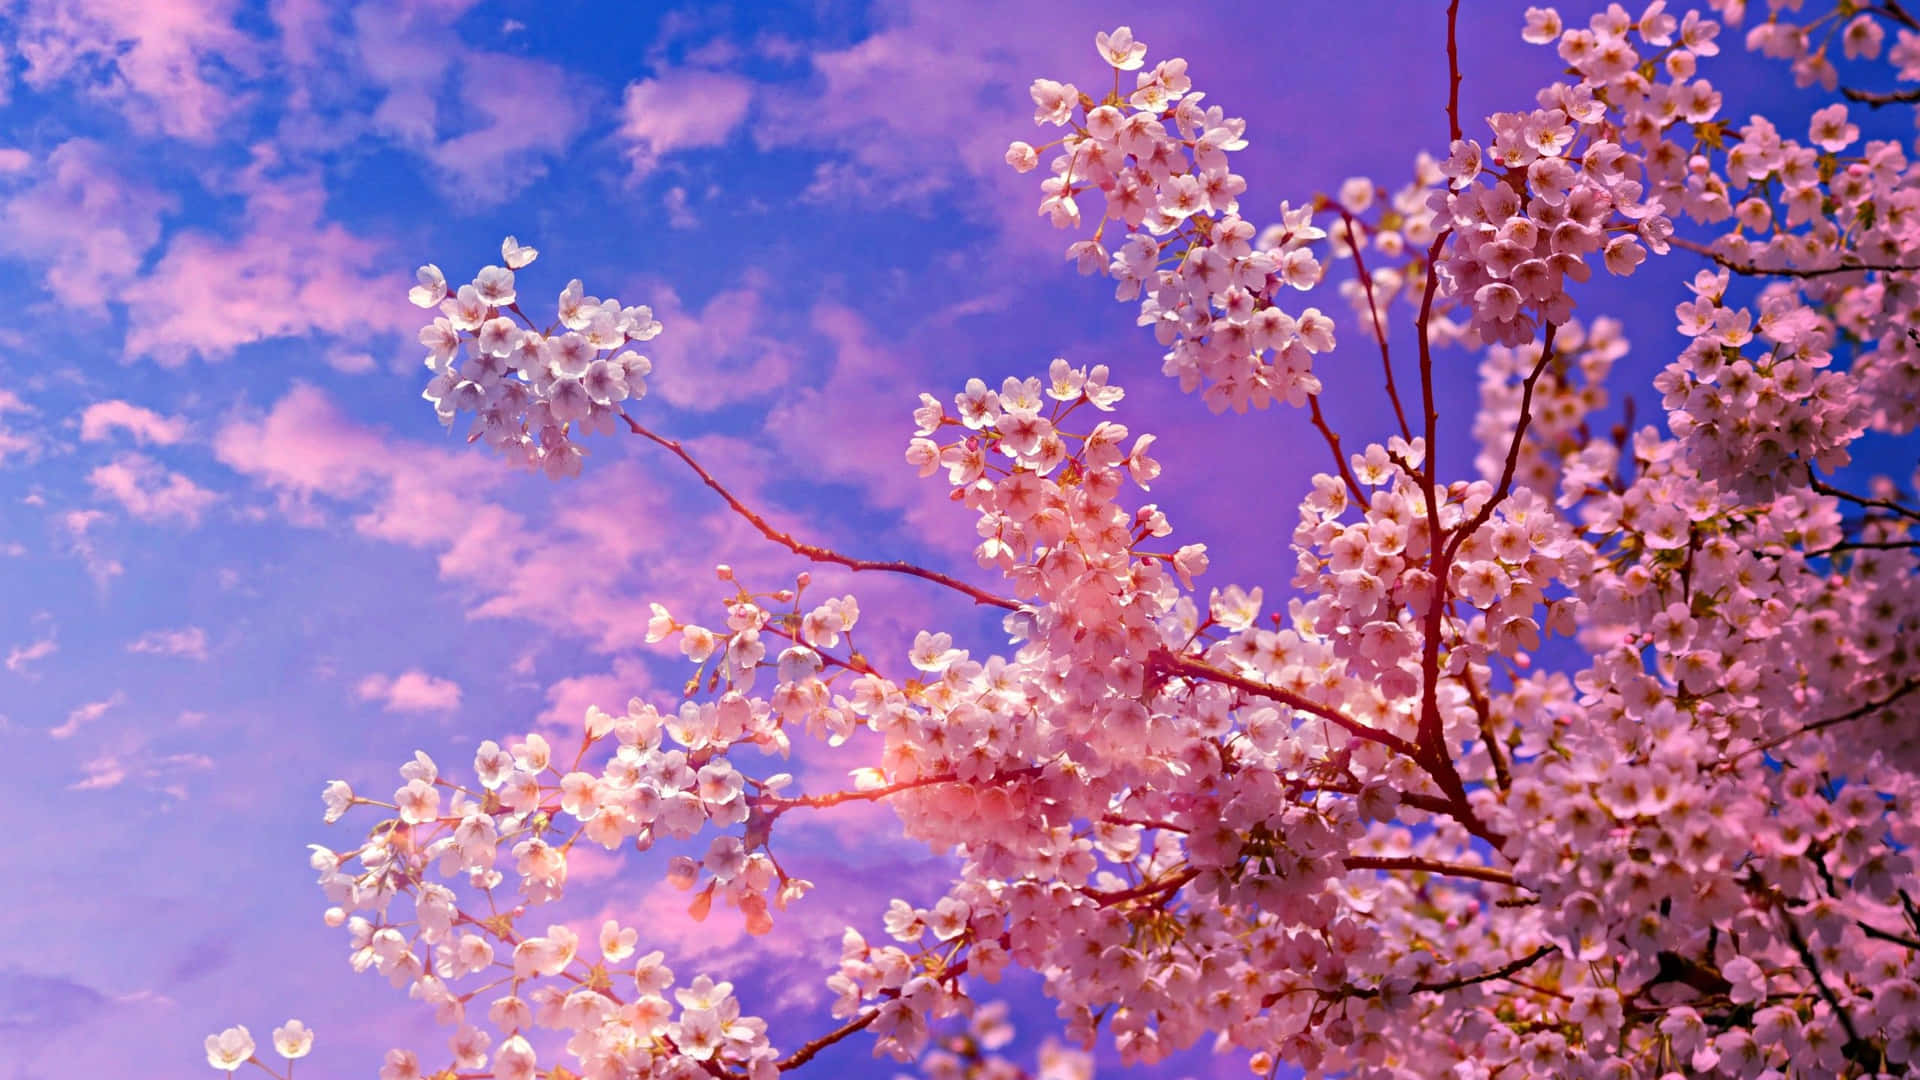 Dark Cherry Blossom Flowers On A Pink Sky Wallpaper